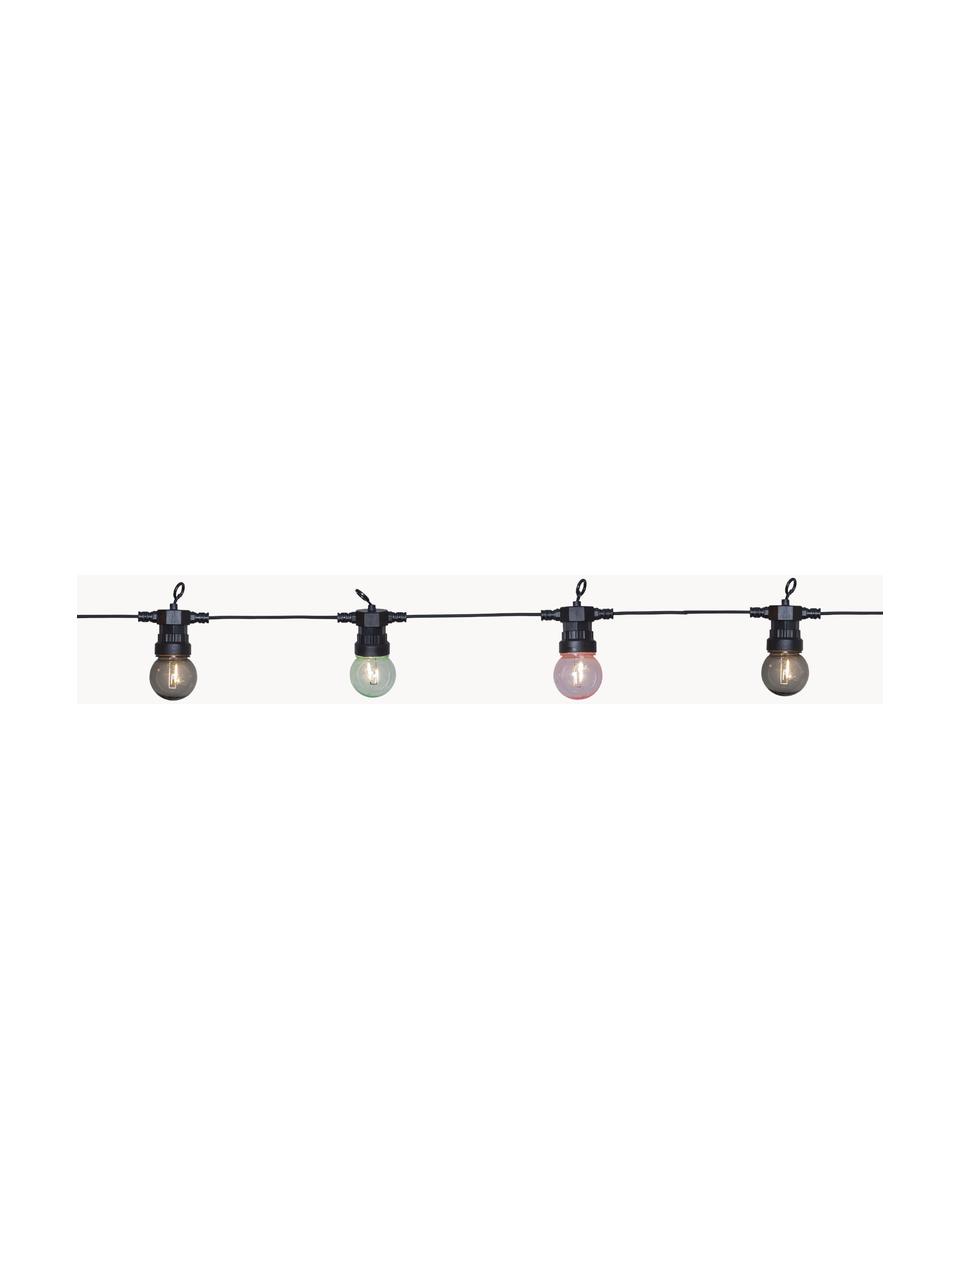 Guirlande lumineuse LED Circus, 855 cm, Noir, multicolore, long. 855 cm